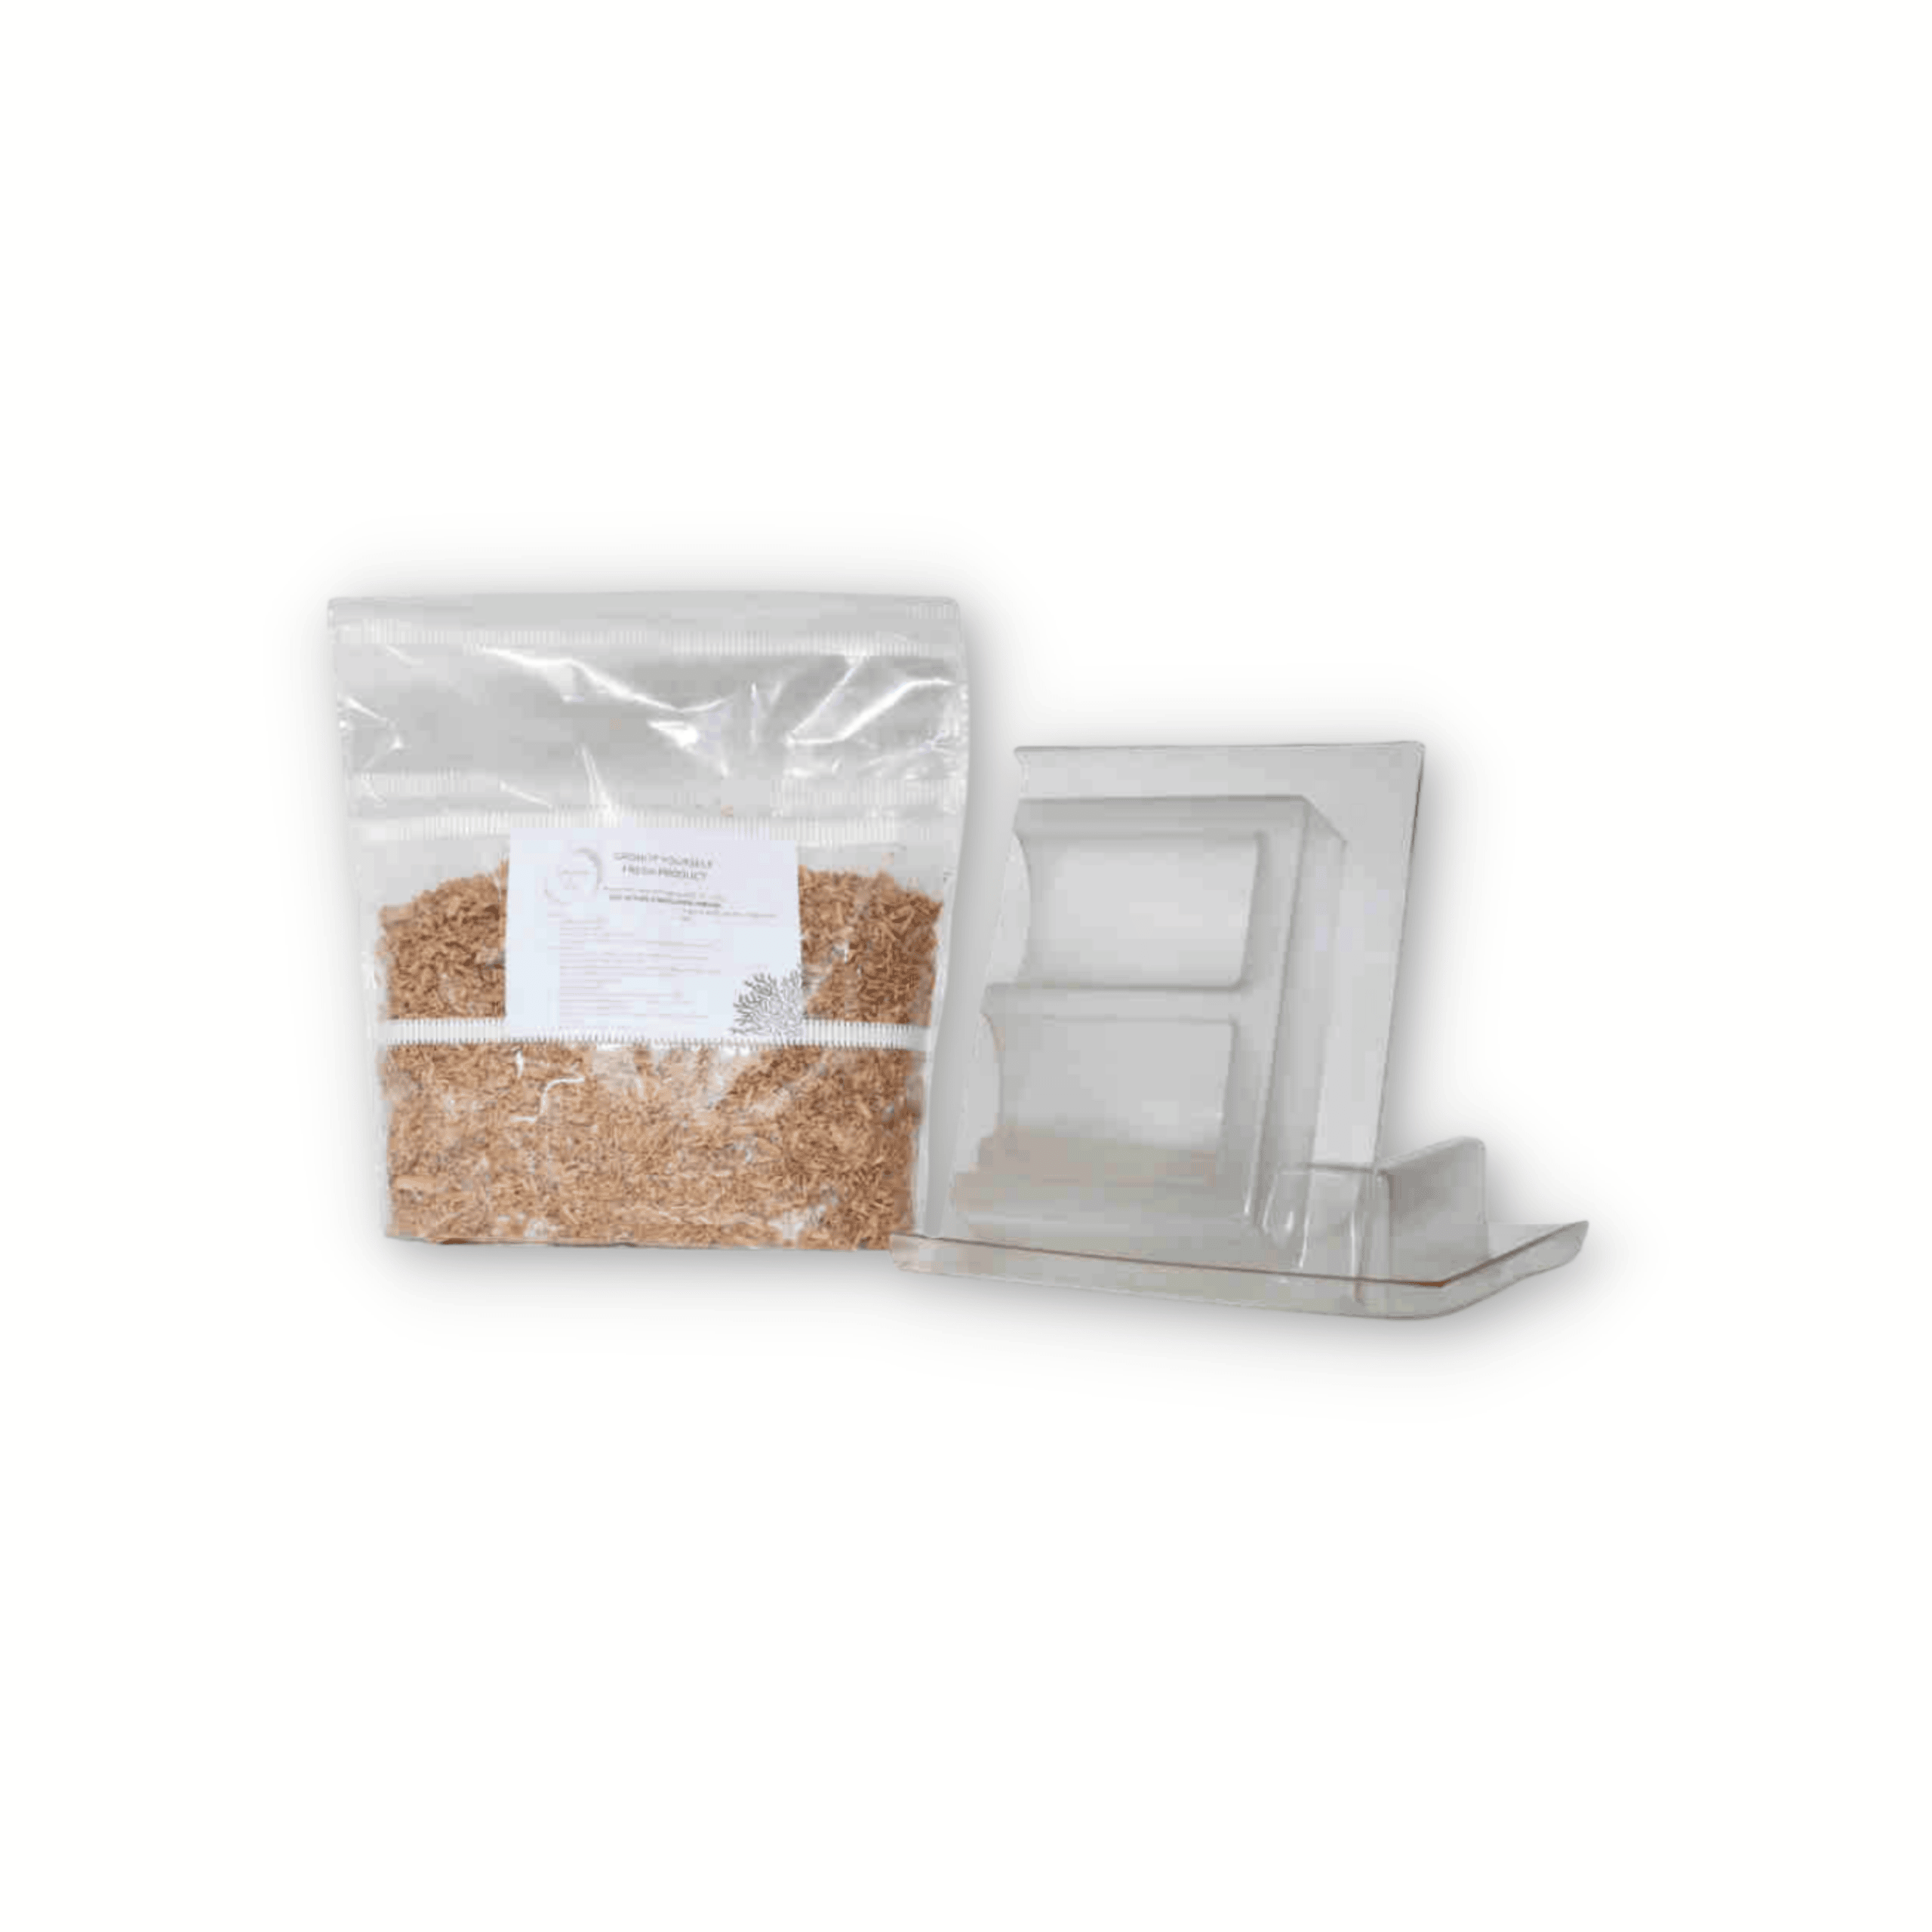 GIY kit with brick mold - GROWN bio